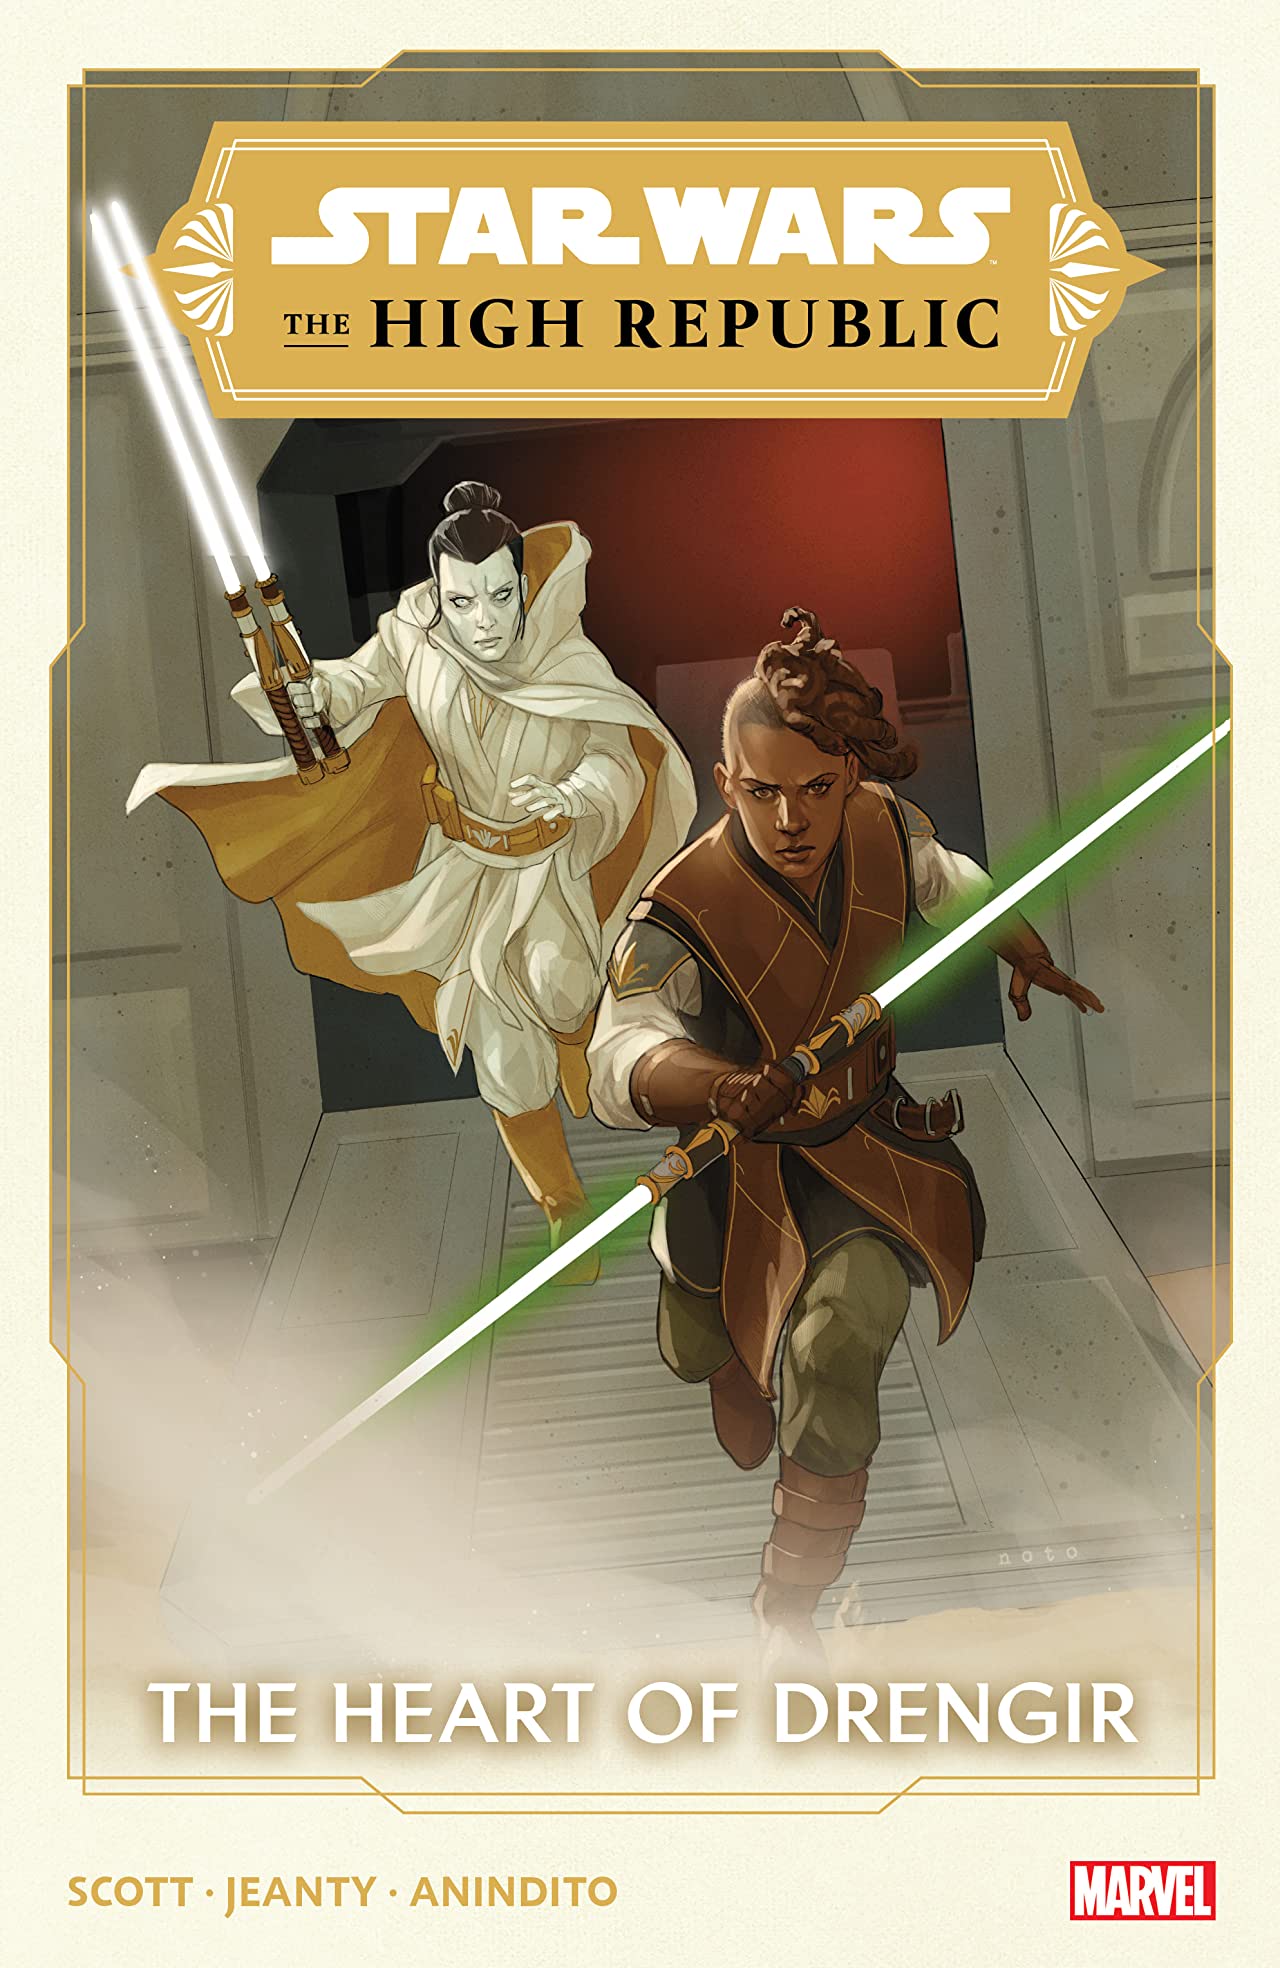 Star Wars: The High Republic Vol. 2: The Heart Of Drengir (Trade Paperback)